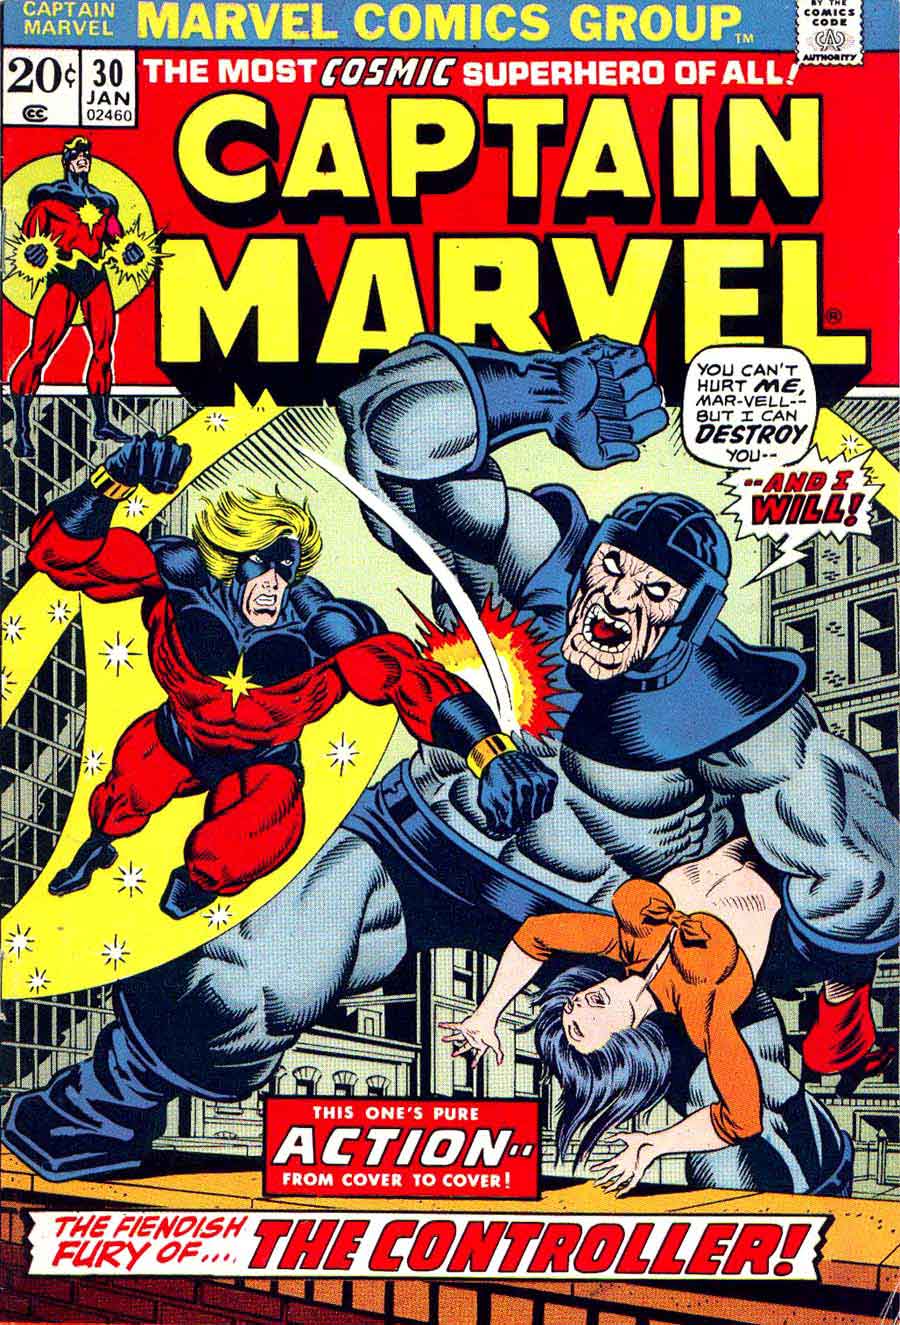 Captain Marvel #30 marvel comic 1970s bronze age comic cover art by Jim Starlin